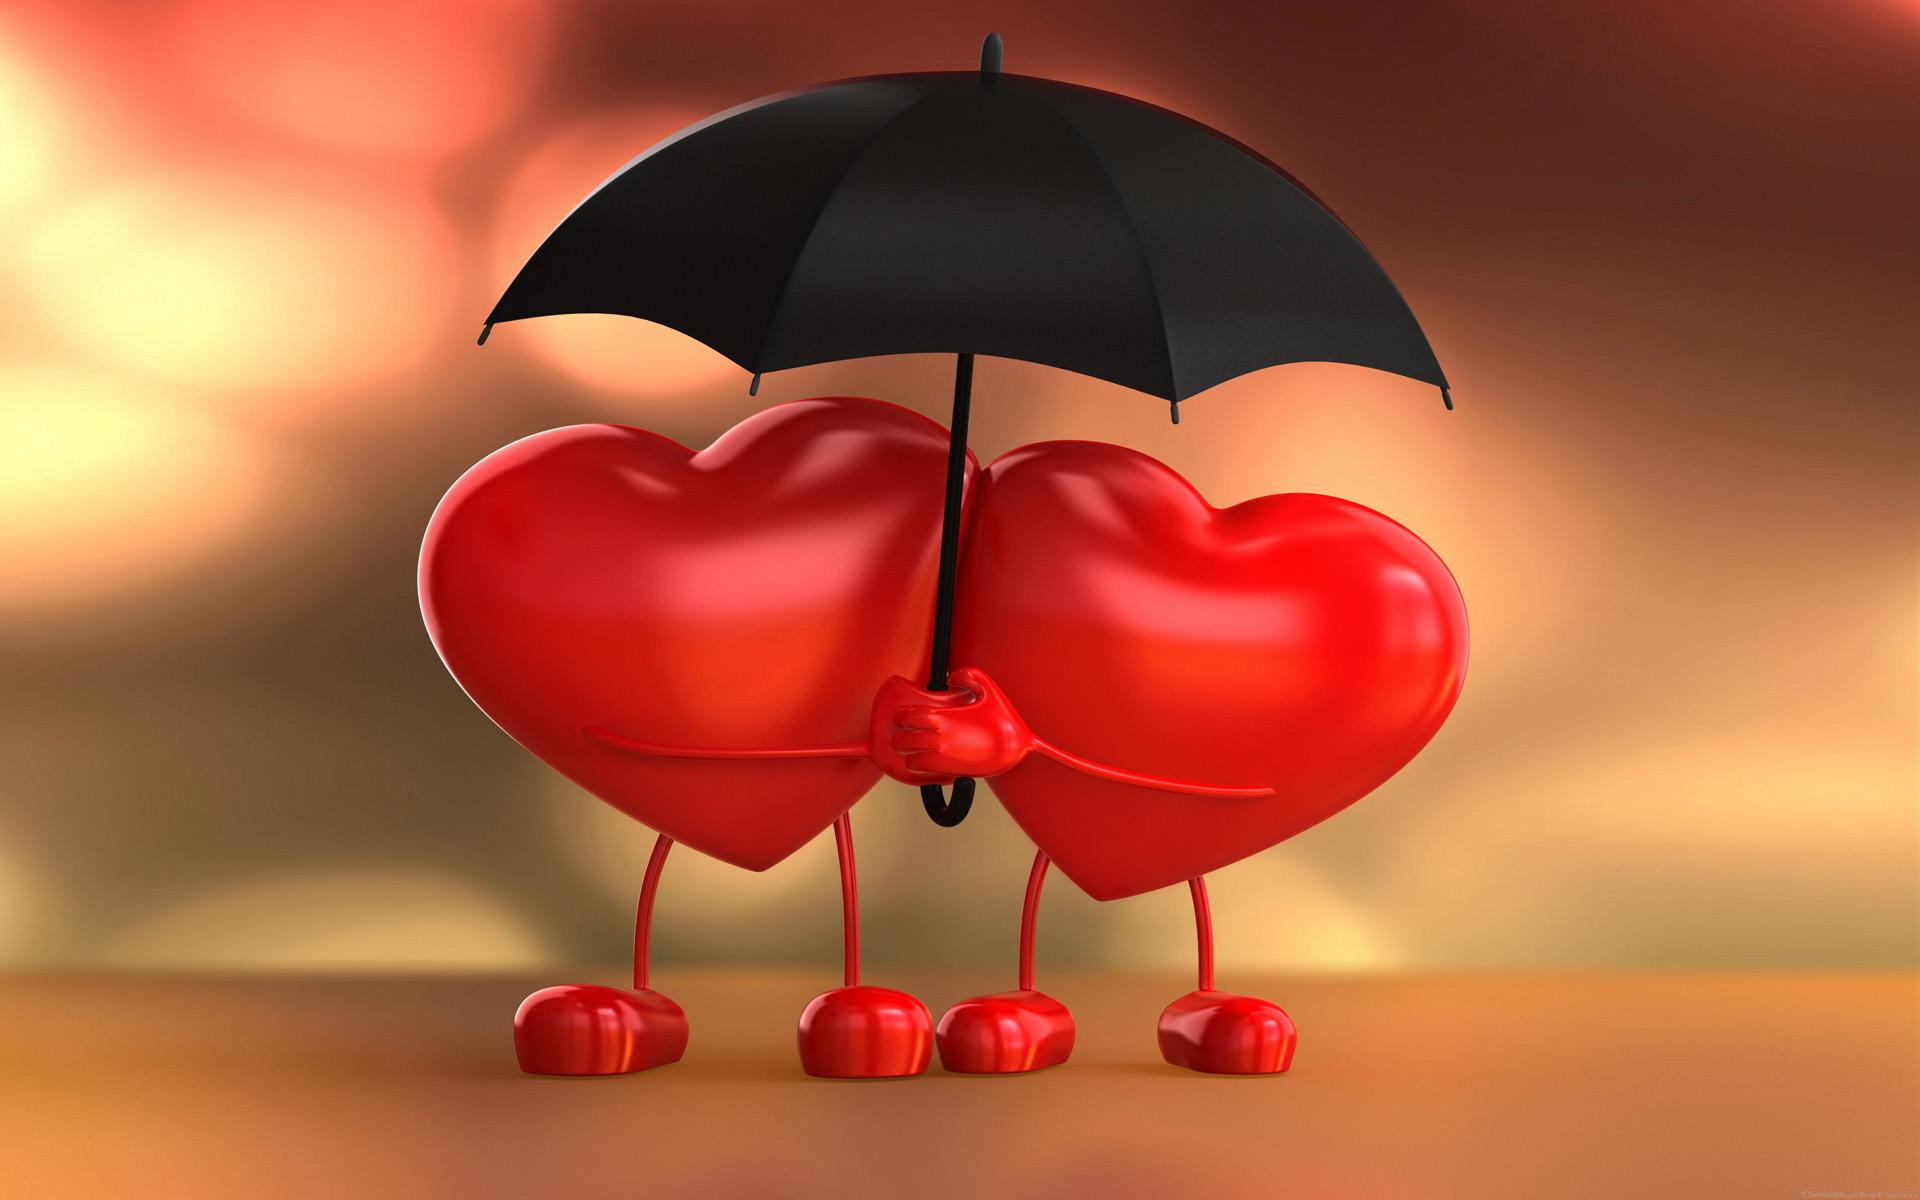 Two Hearts Valentine Hearts Love Hearts With Umbrella